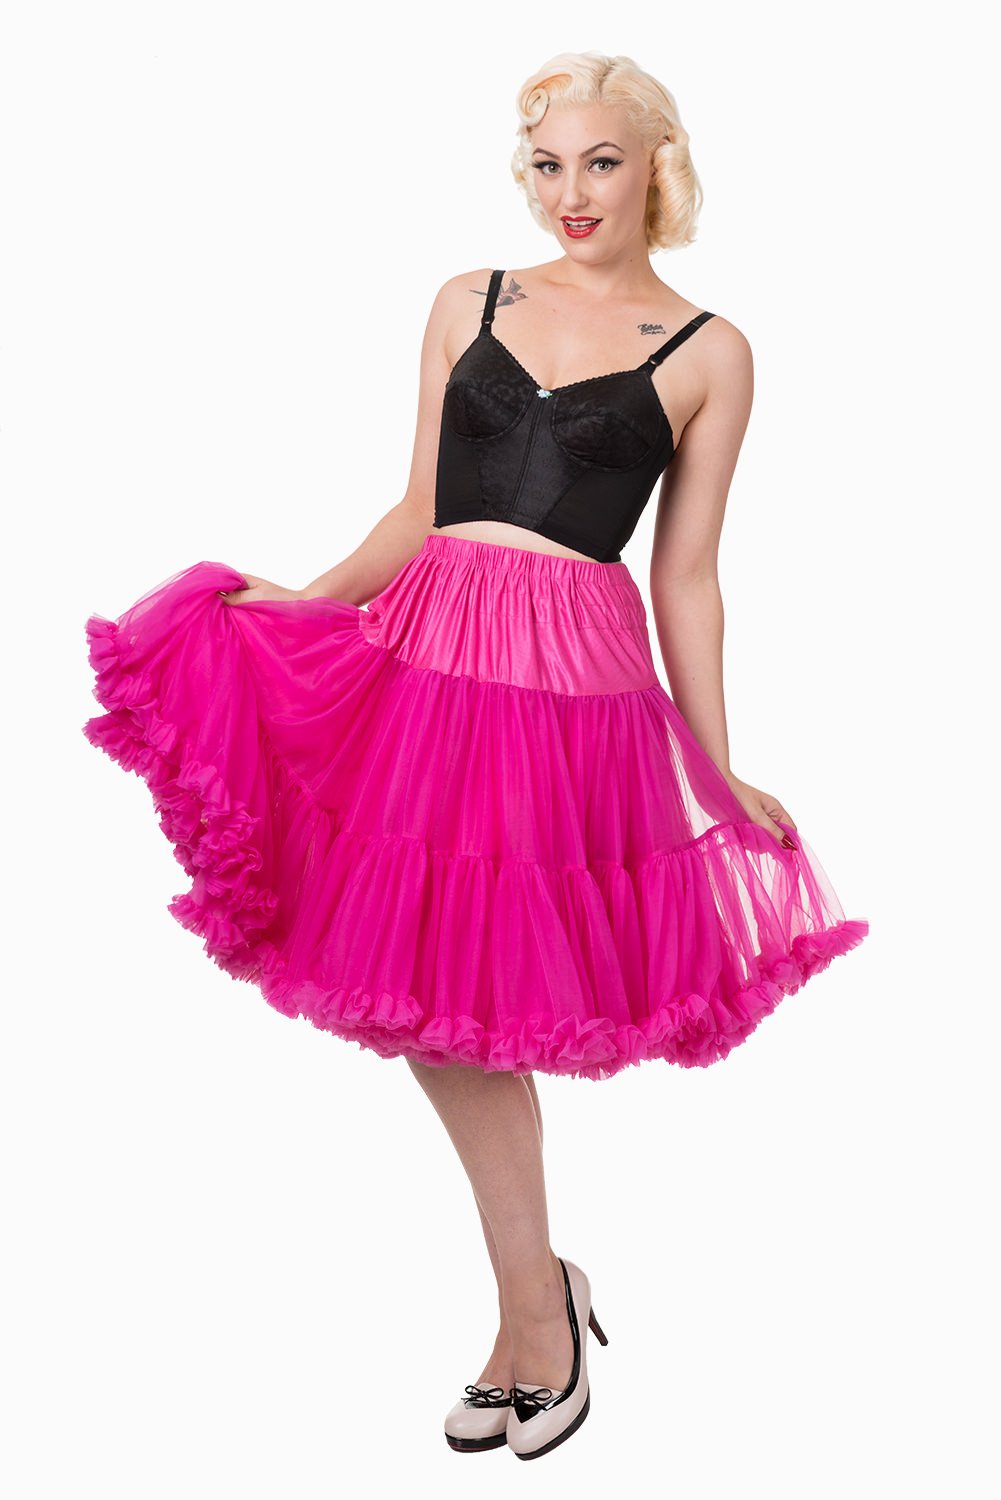 Banned SBN235 Starlite Petticoat Hot Pink